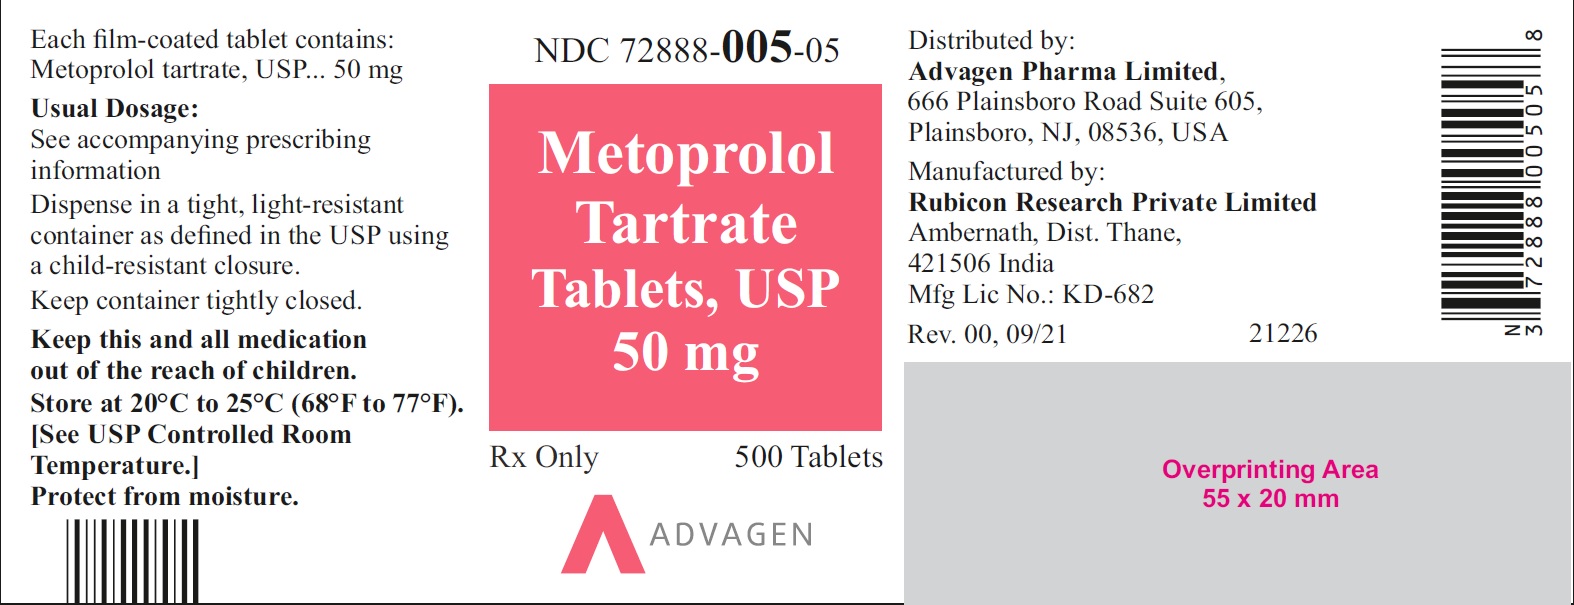 NDC 72888-005-05 - Metoprolol Tartrate Tablets, USP 50 mg - 500 Tablets